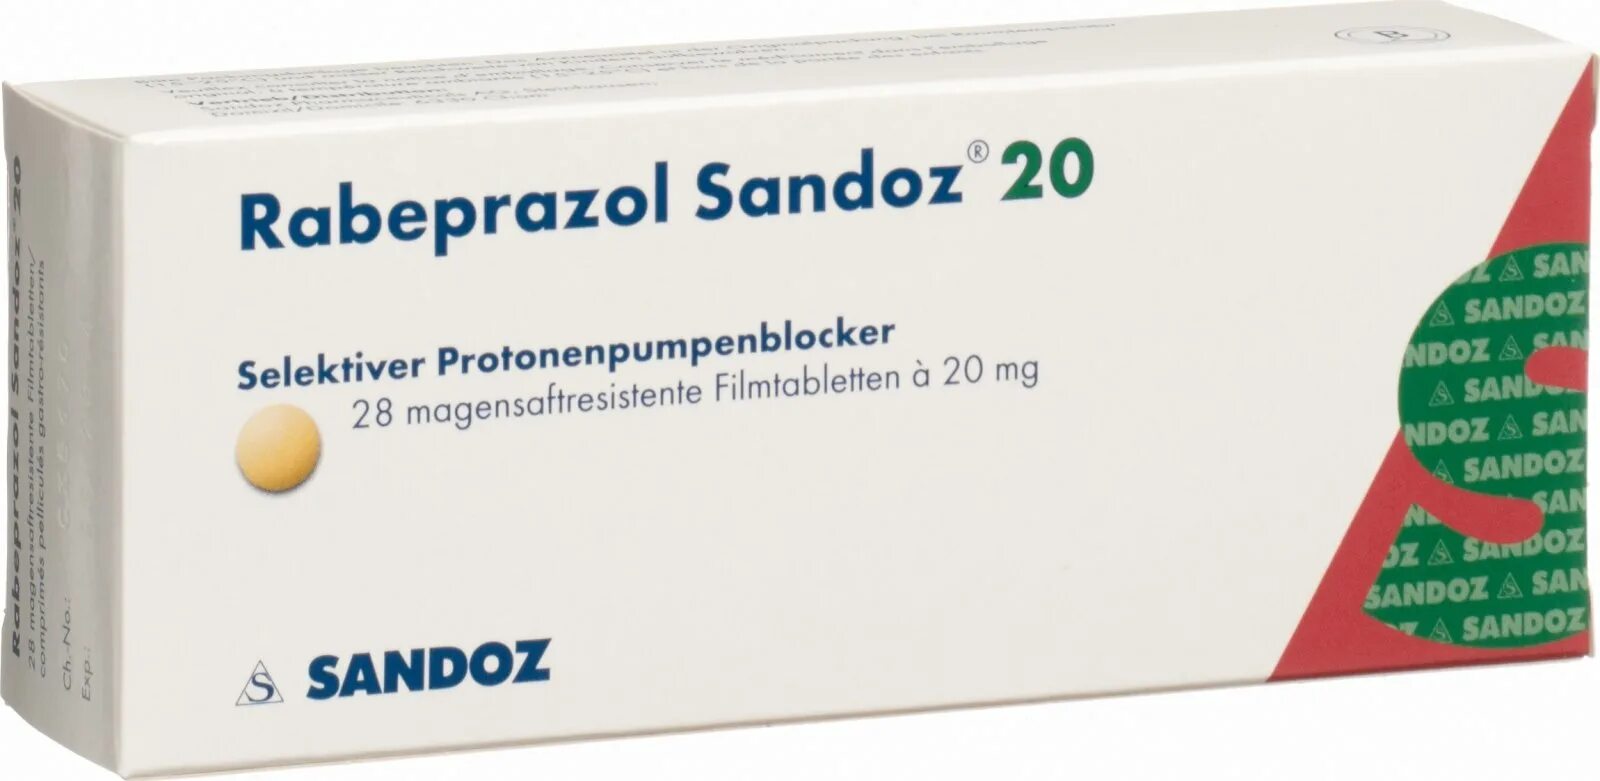 Rabeprazole 20 мг. Рабепразол Северная звезда 20 мг. Рабепразол 40 мг амп. Рабепразол c3 20мг.